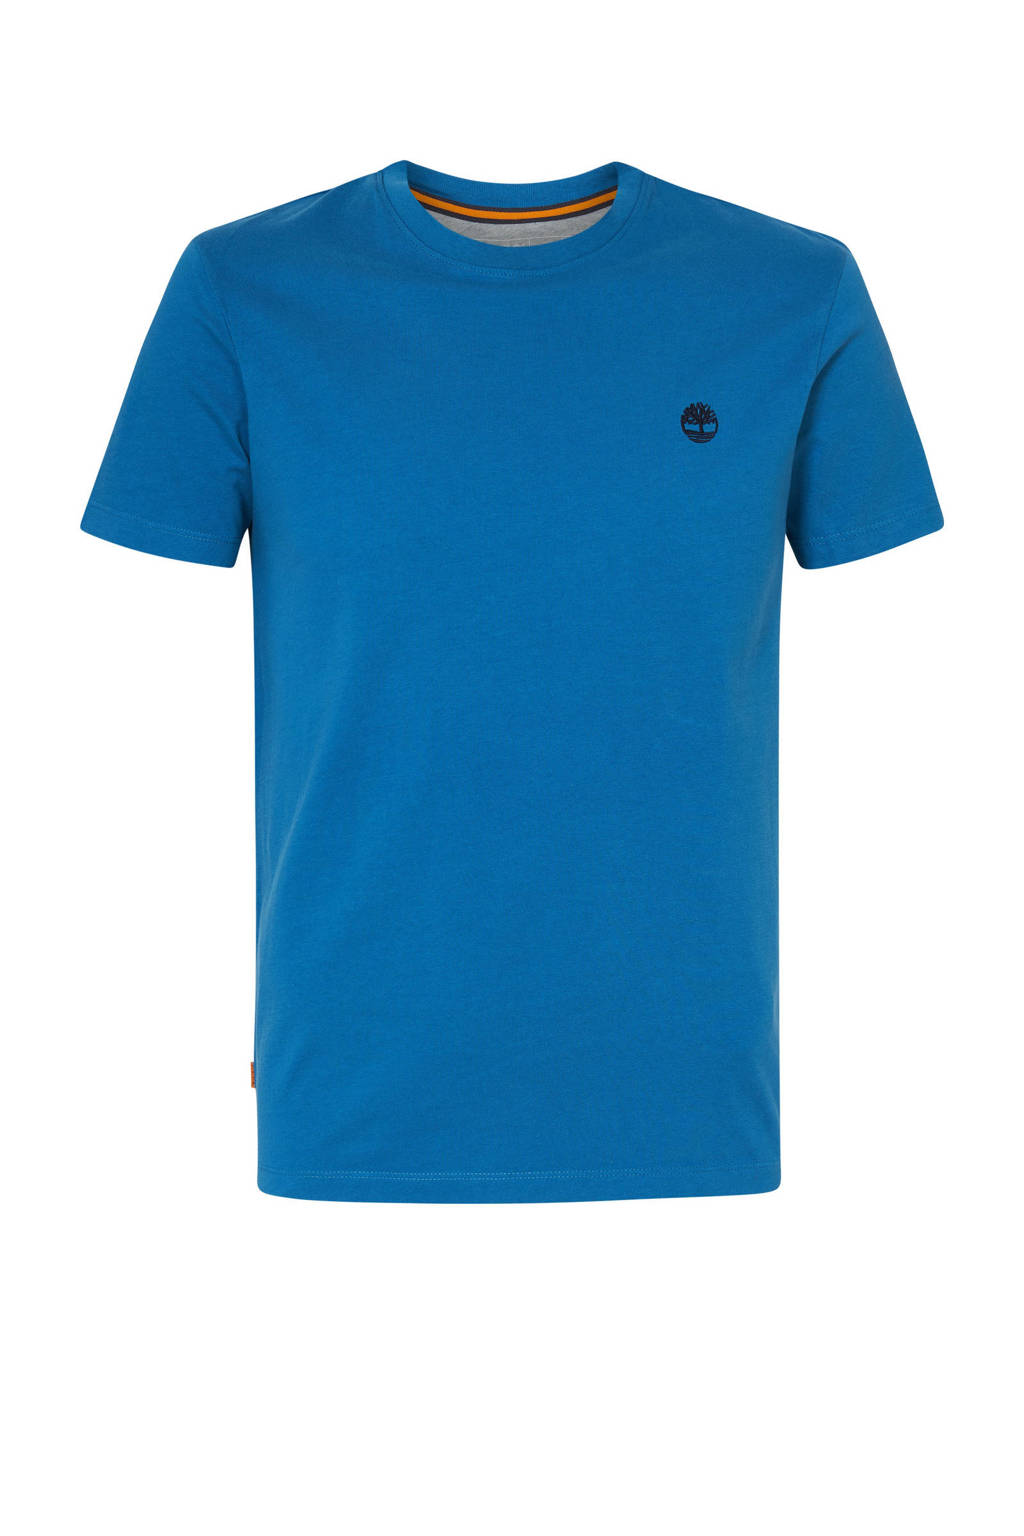 Timberland T-shirt met logo turquoise, Turquoise